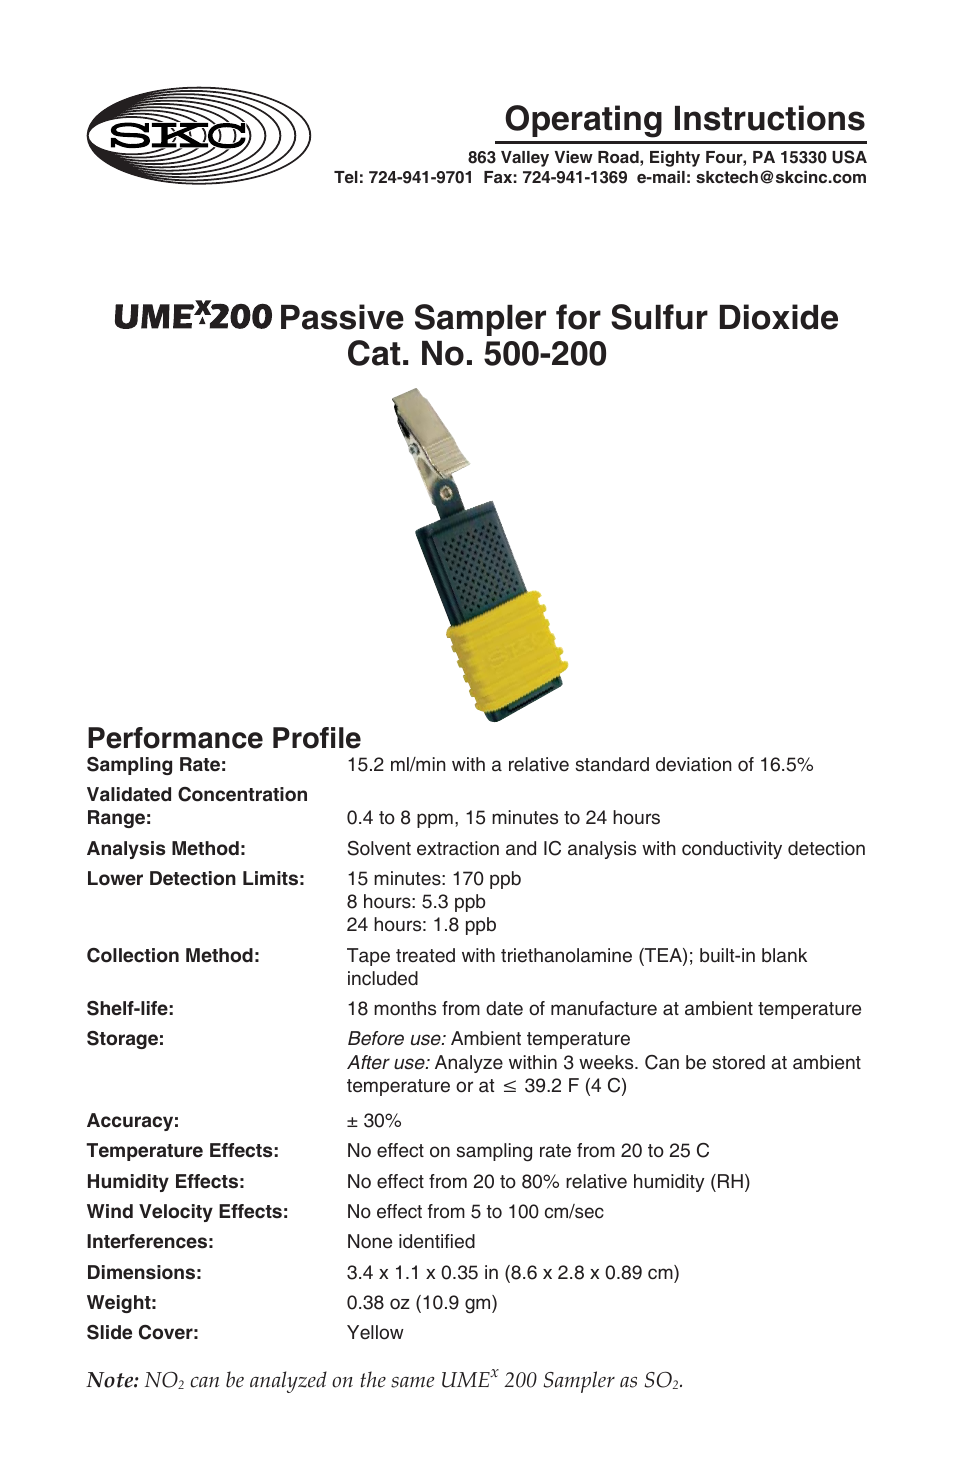 500-200 UMEx 200 Passive Sampler for Sulfur Dioxide